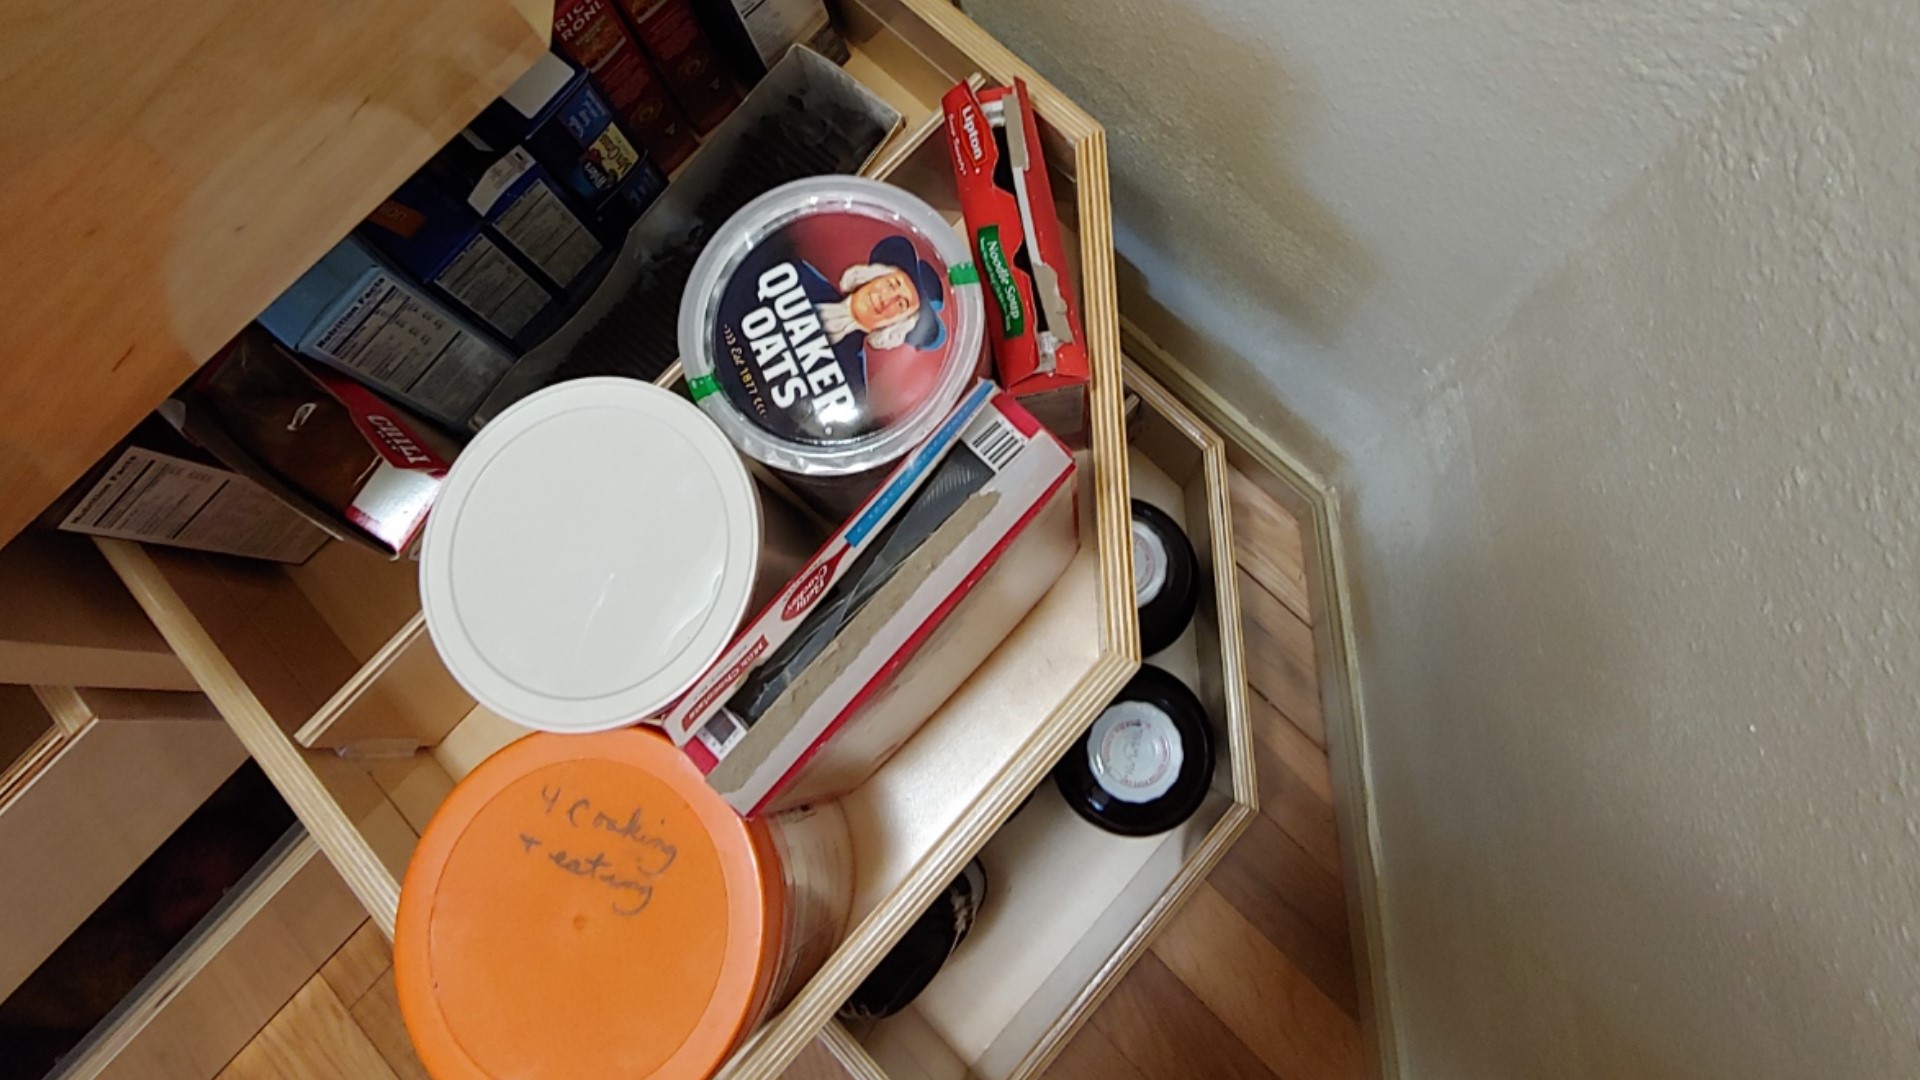 The custom Glide-Out shelves help make organization a breeze. Sponsored by ShelfGenie.